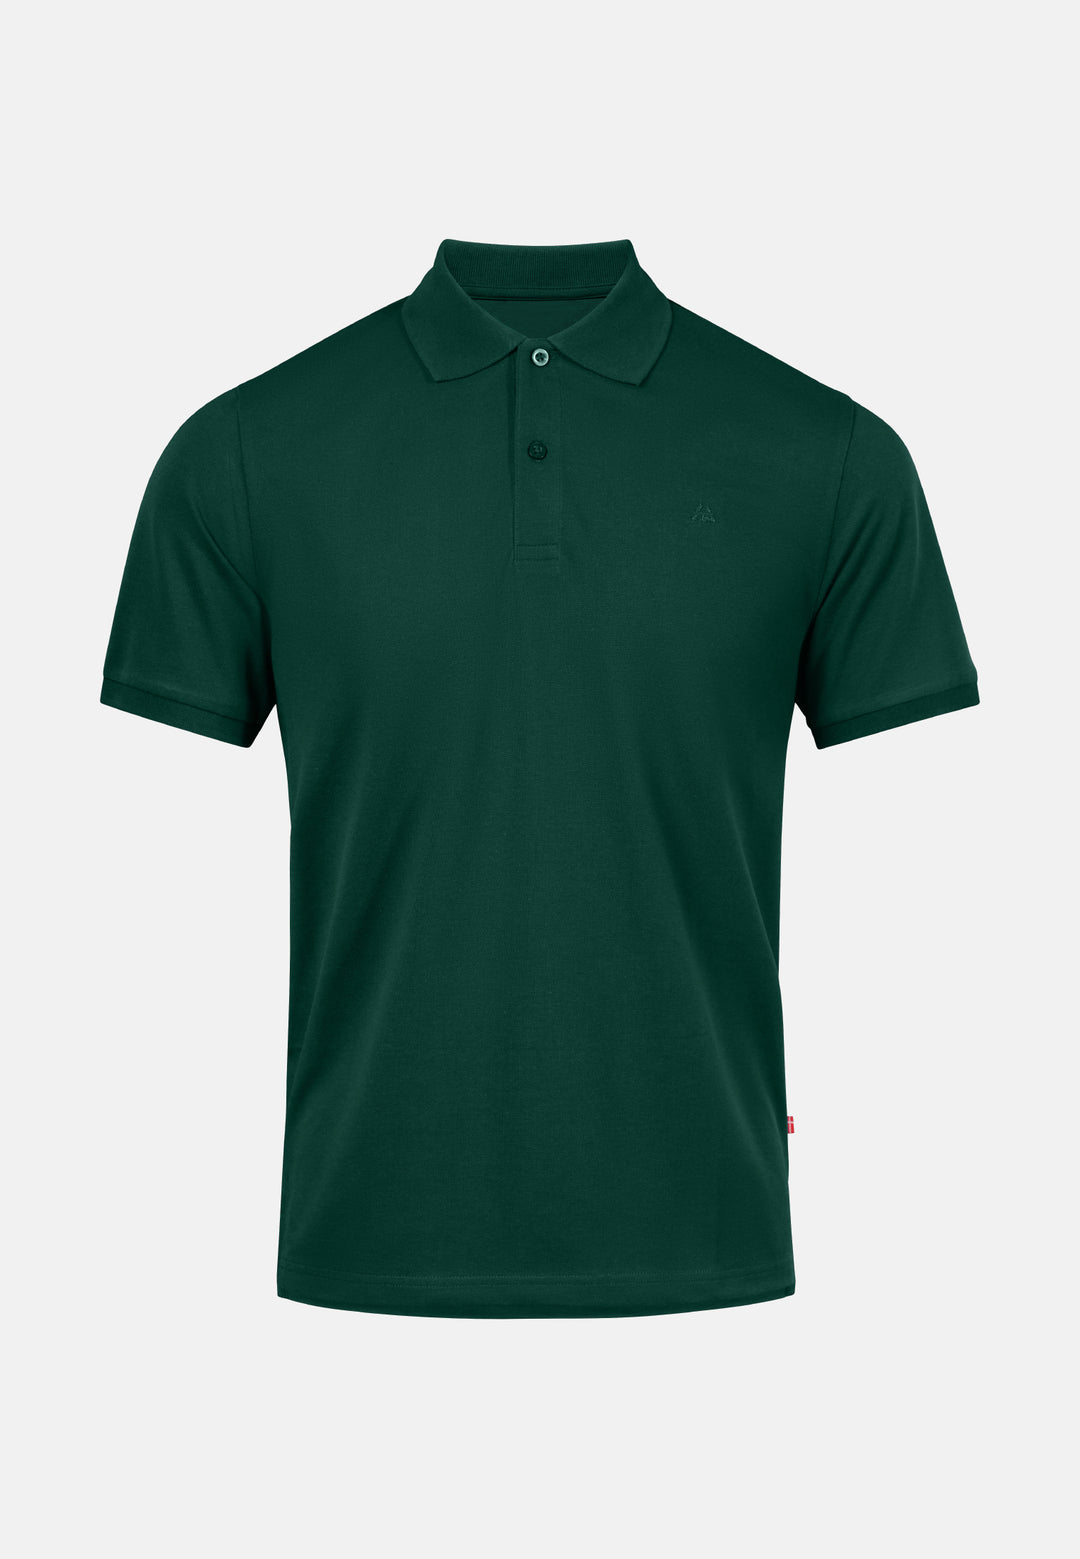 Men's Organic Cotton Essential Classic Pique Polo Shirt in Black